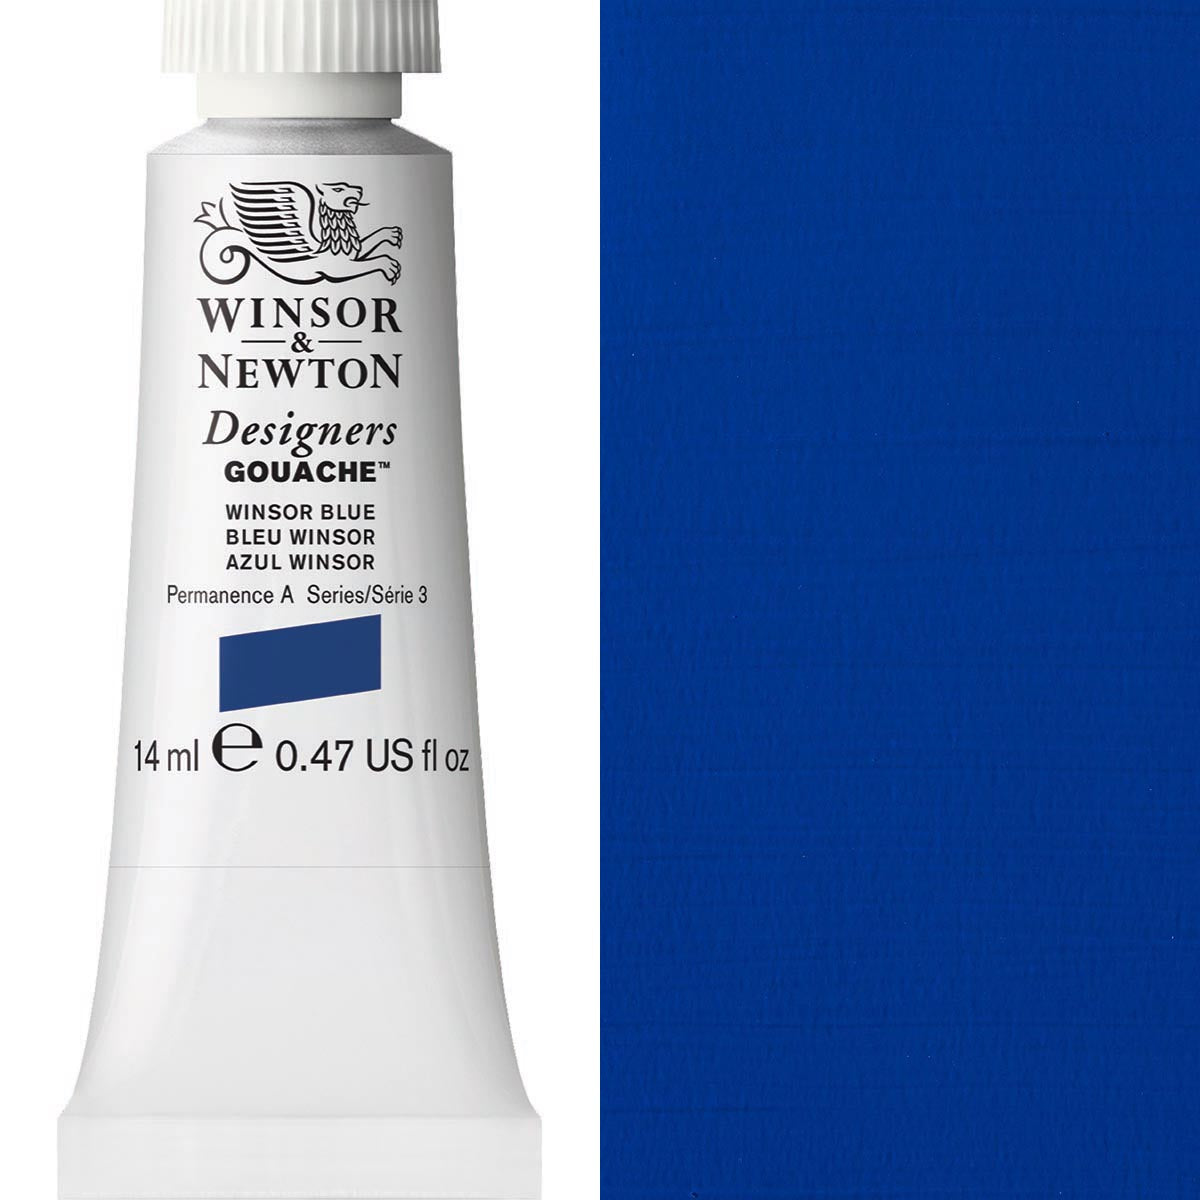 Winsor and Newton - Designers Gouache - 14ml - Winsor Blue